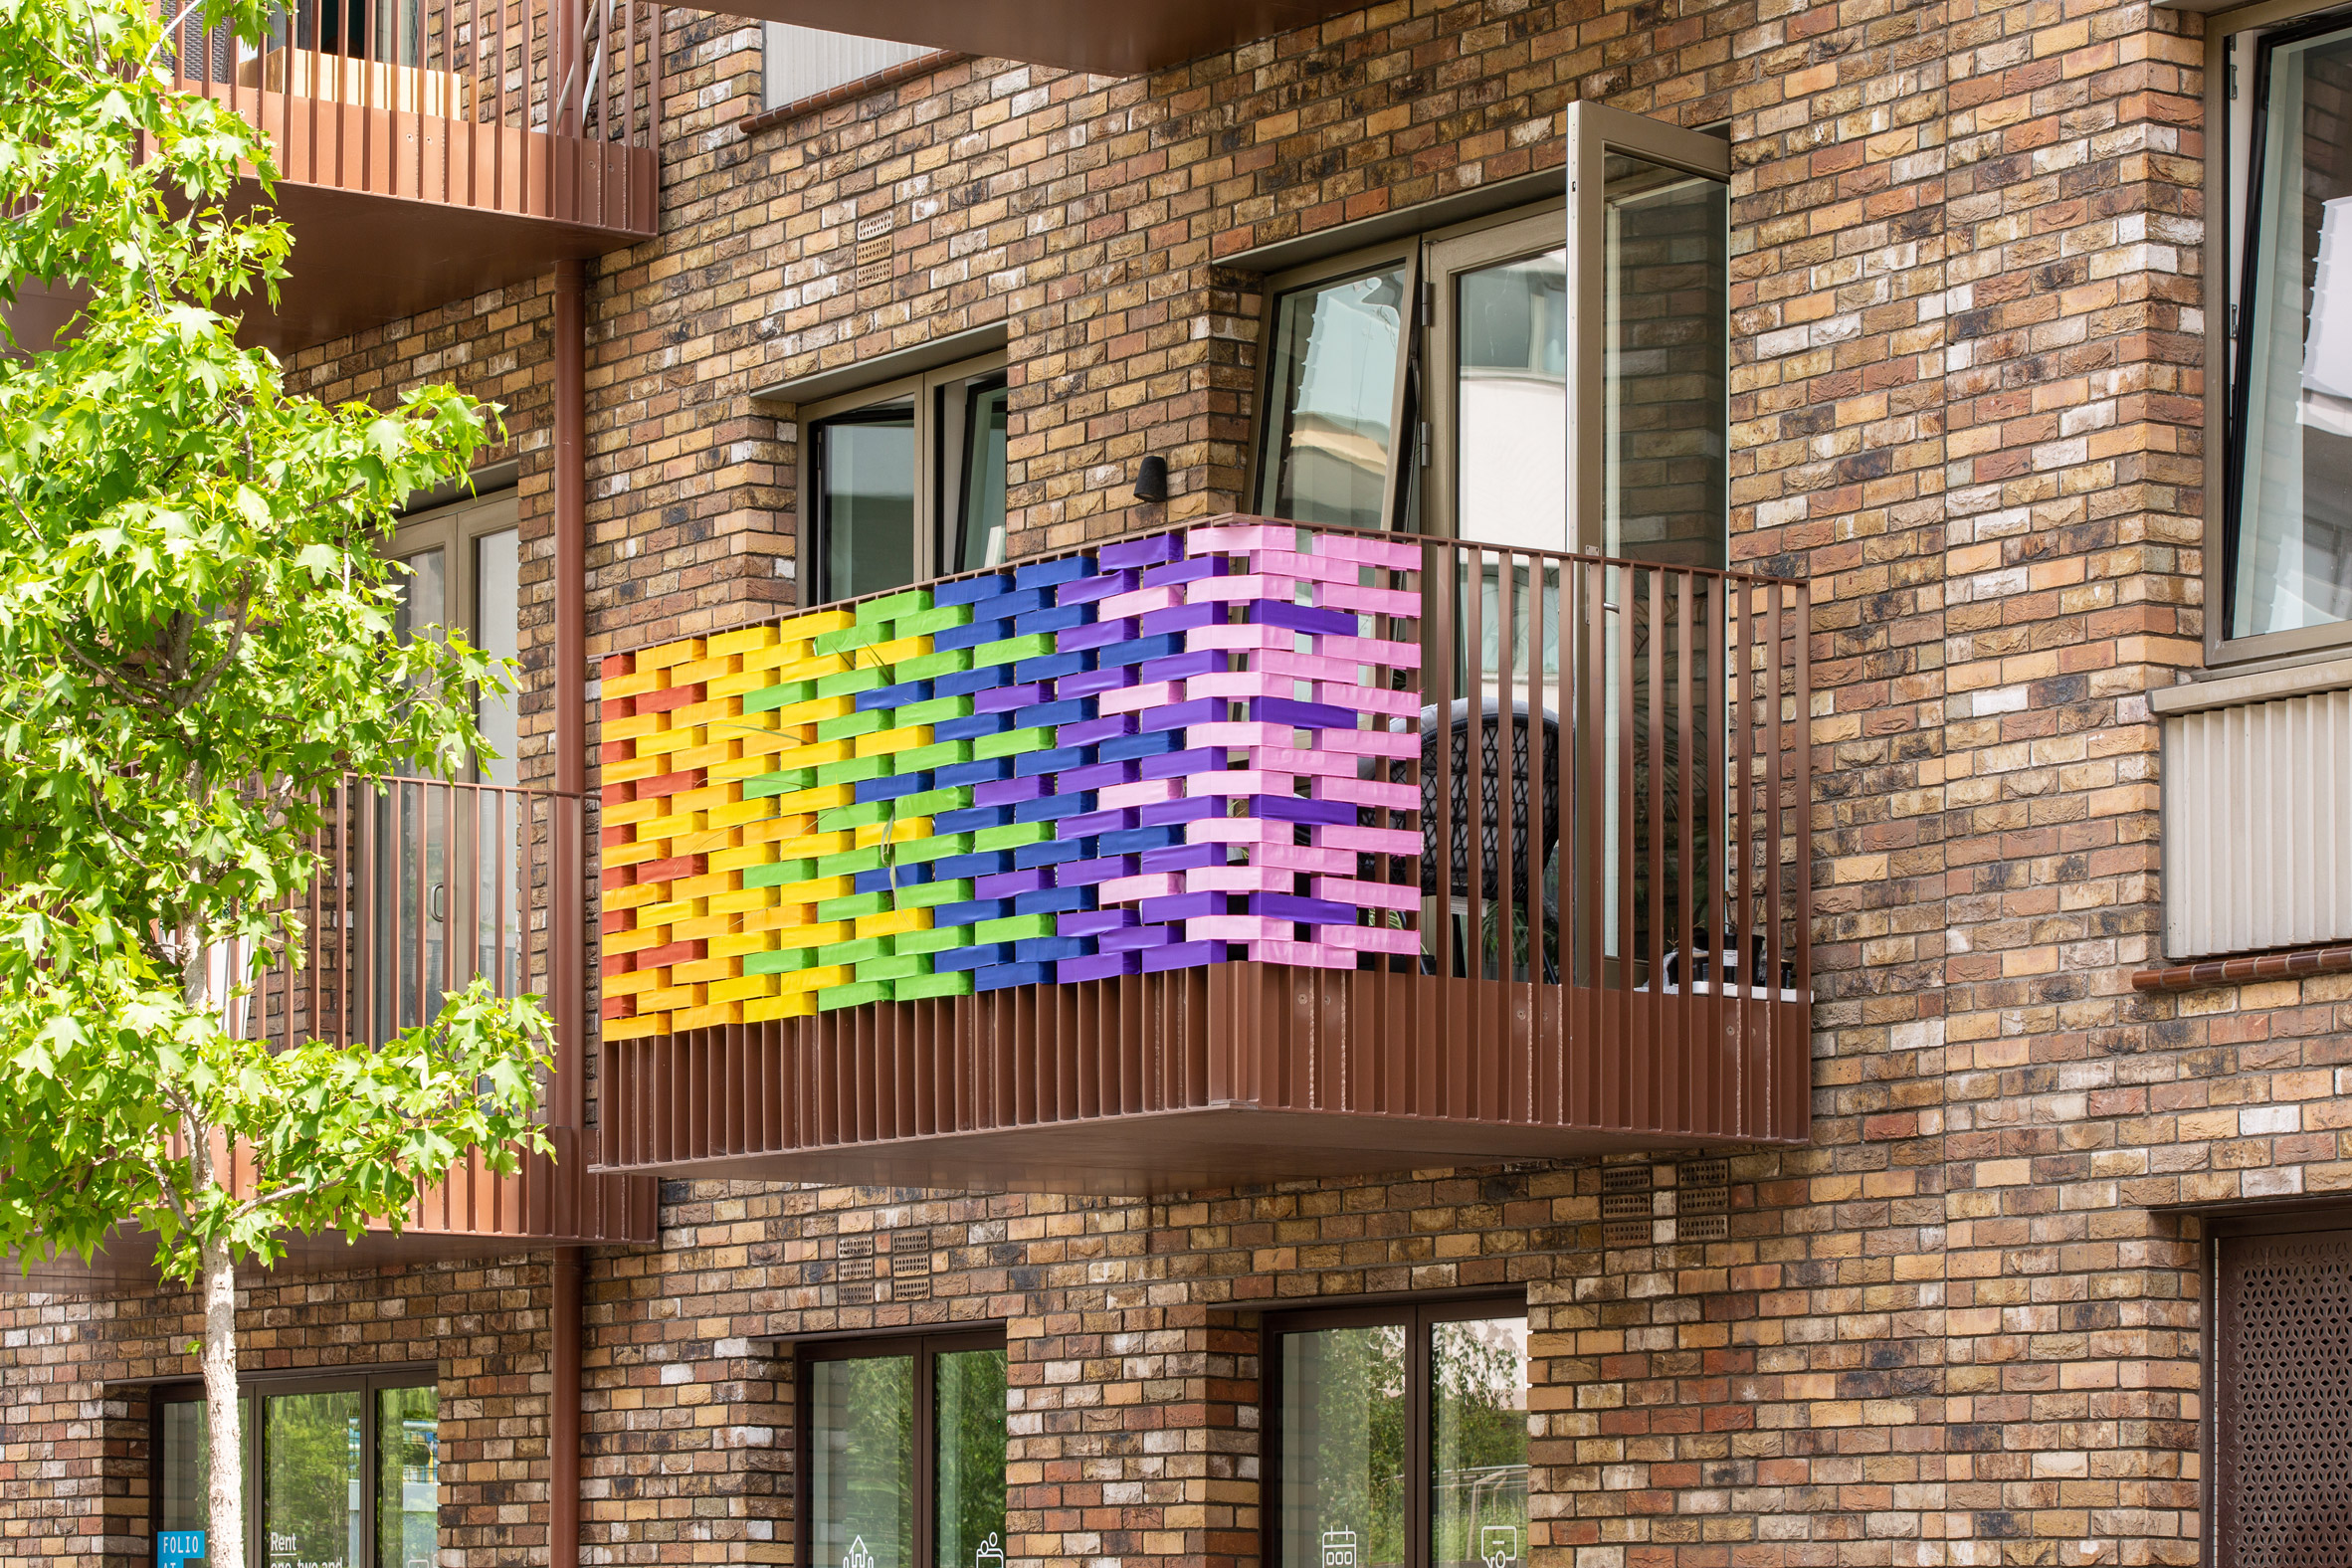 Balcony prototype for RAW Rainbow design installation by Studio Curiosity in London, UK